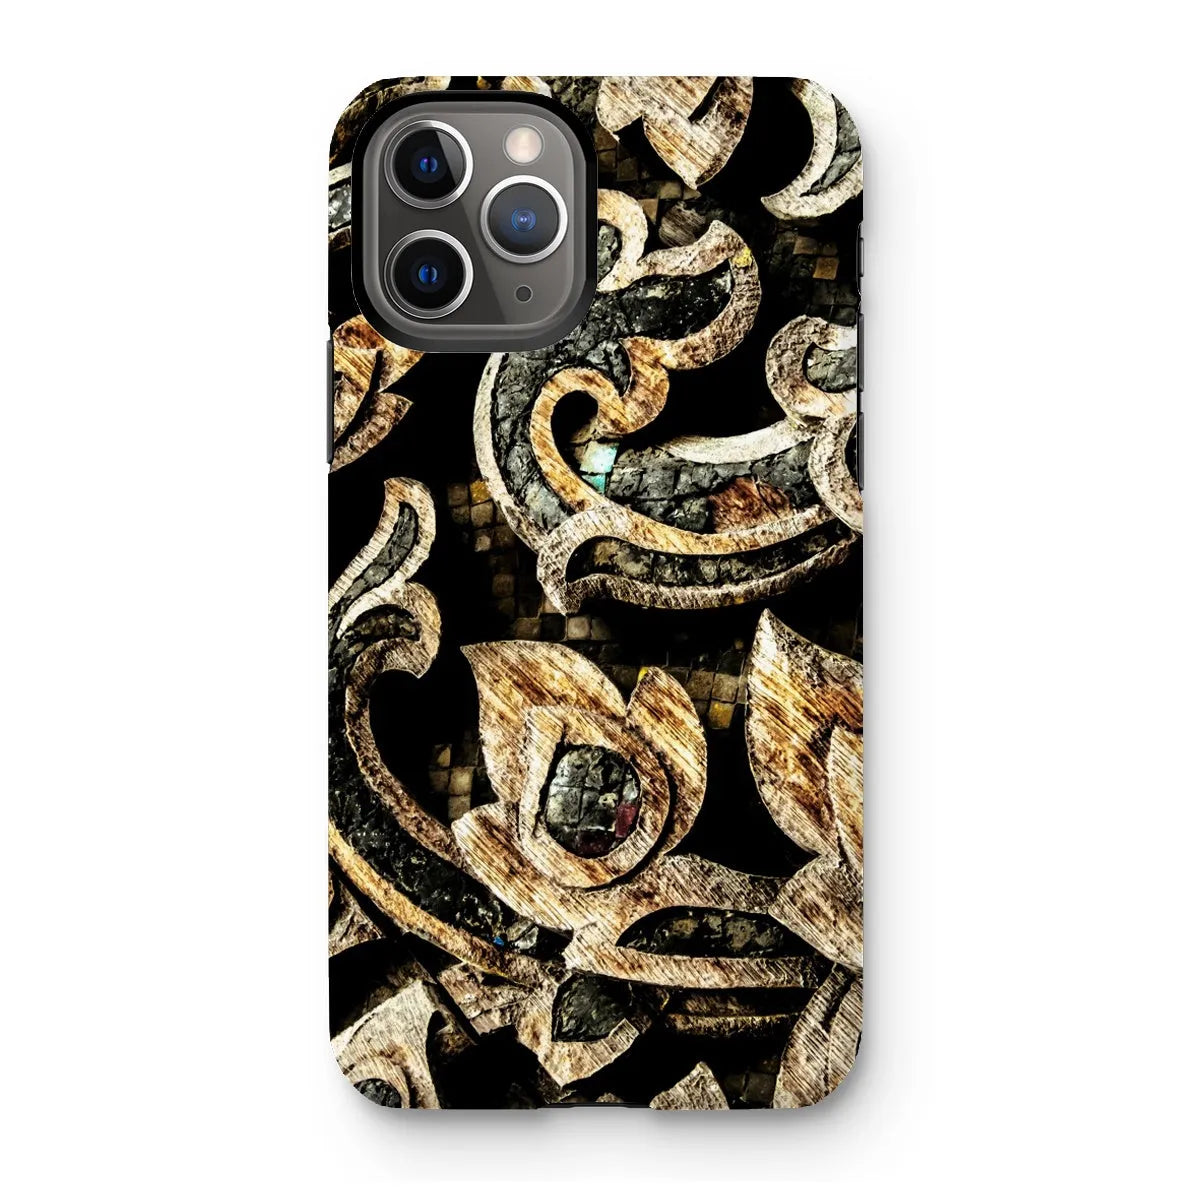 Against The Grain Tough Phone Case - Iphone 11 Pro / Matte - Mobile Phone Cases - Aesthetic Art